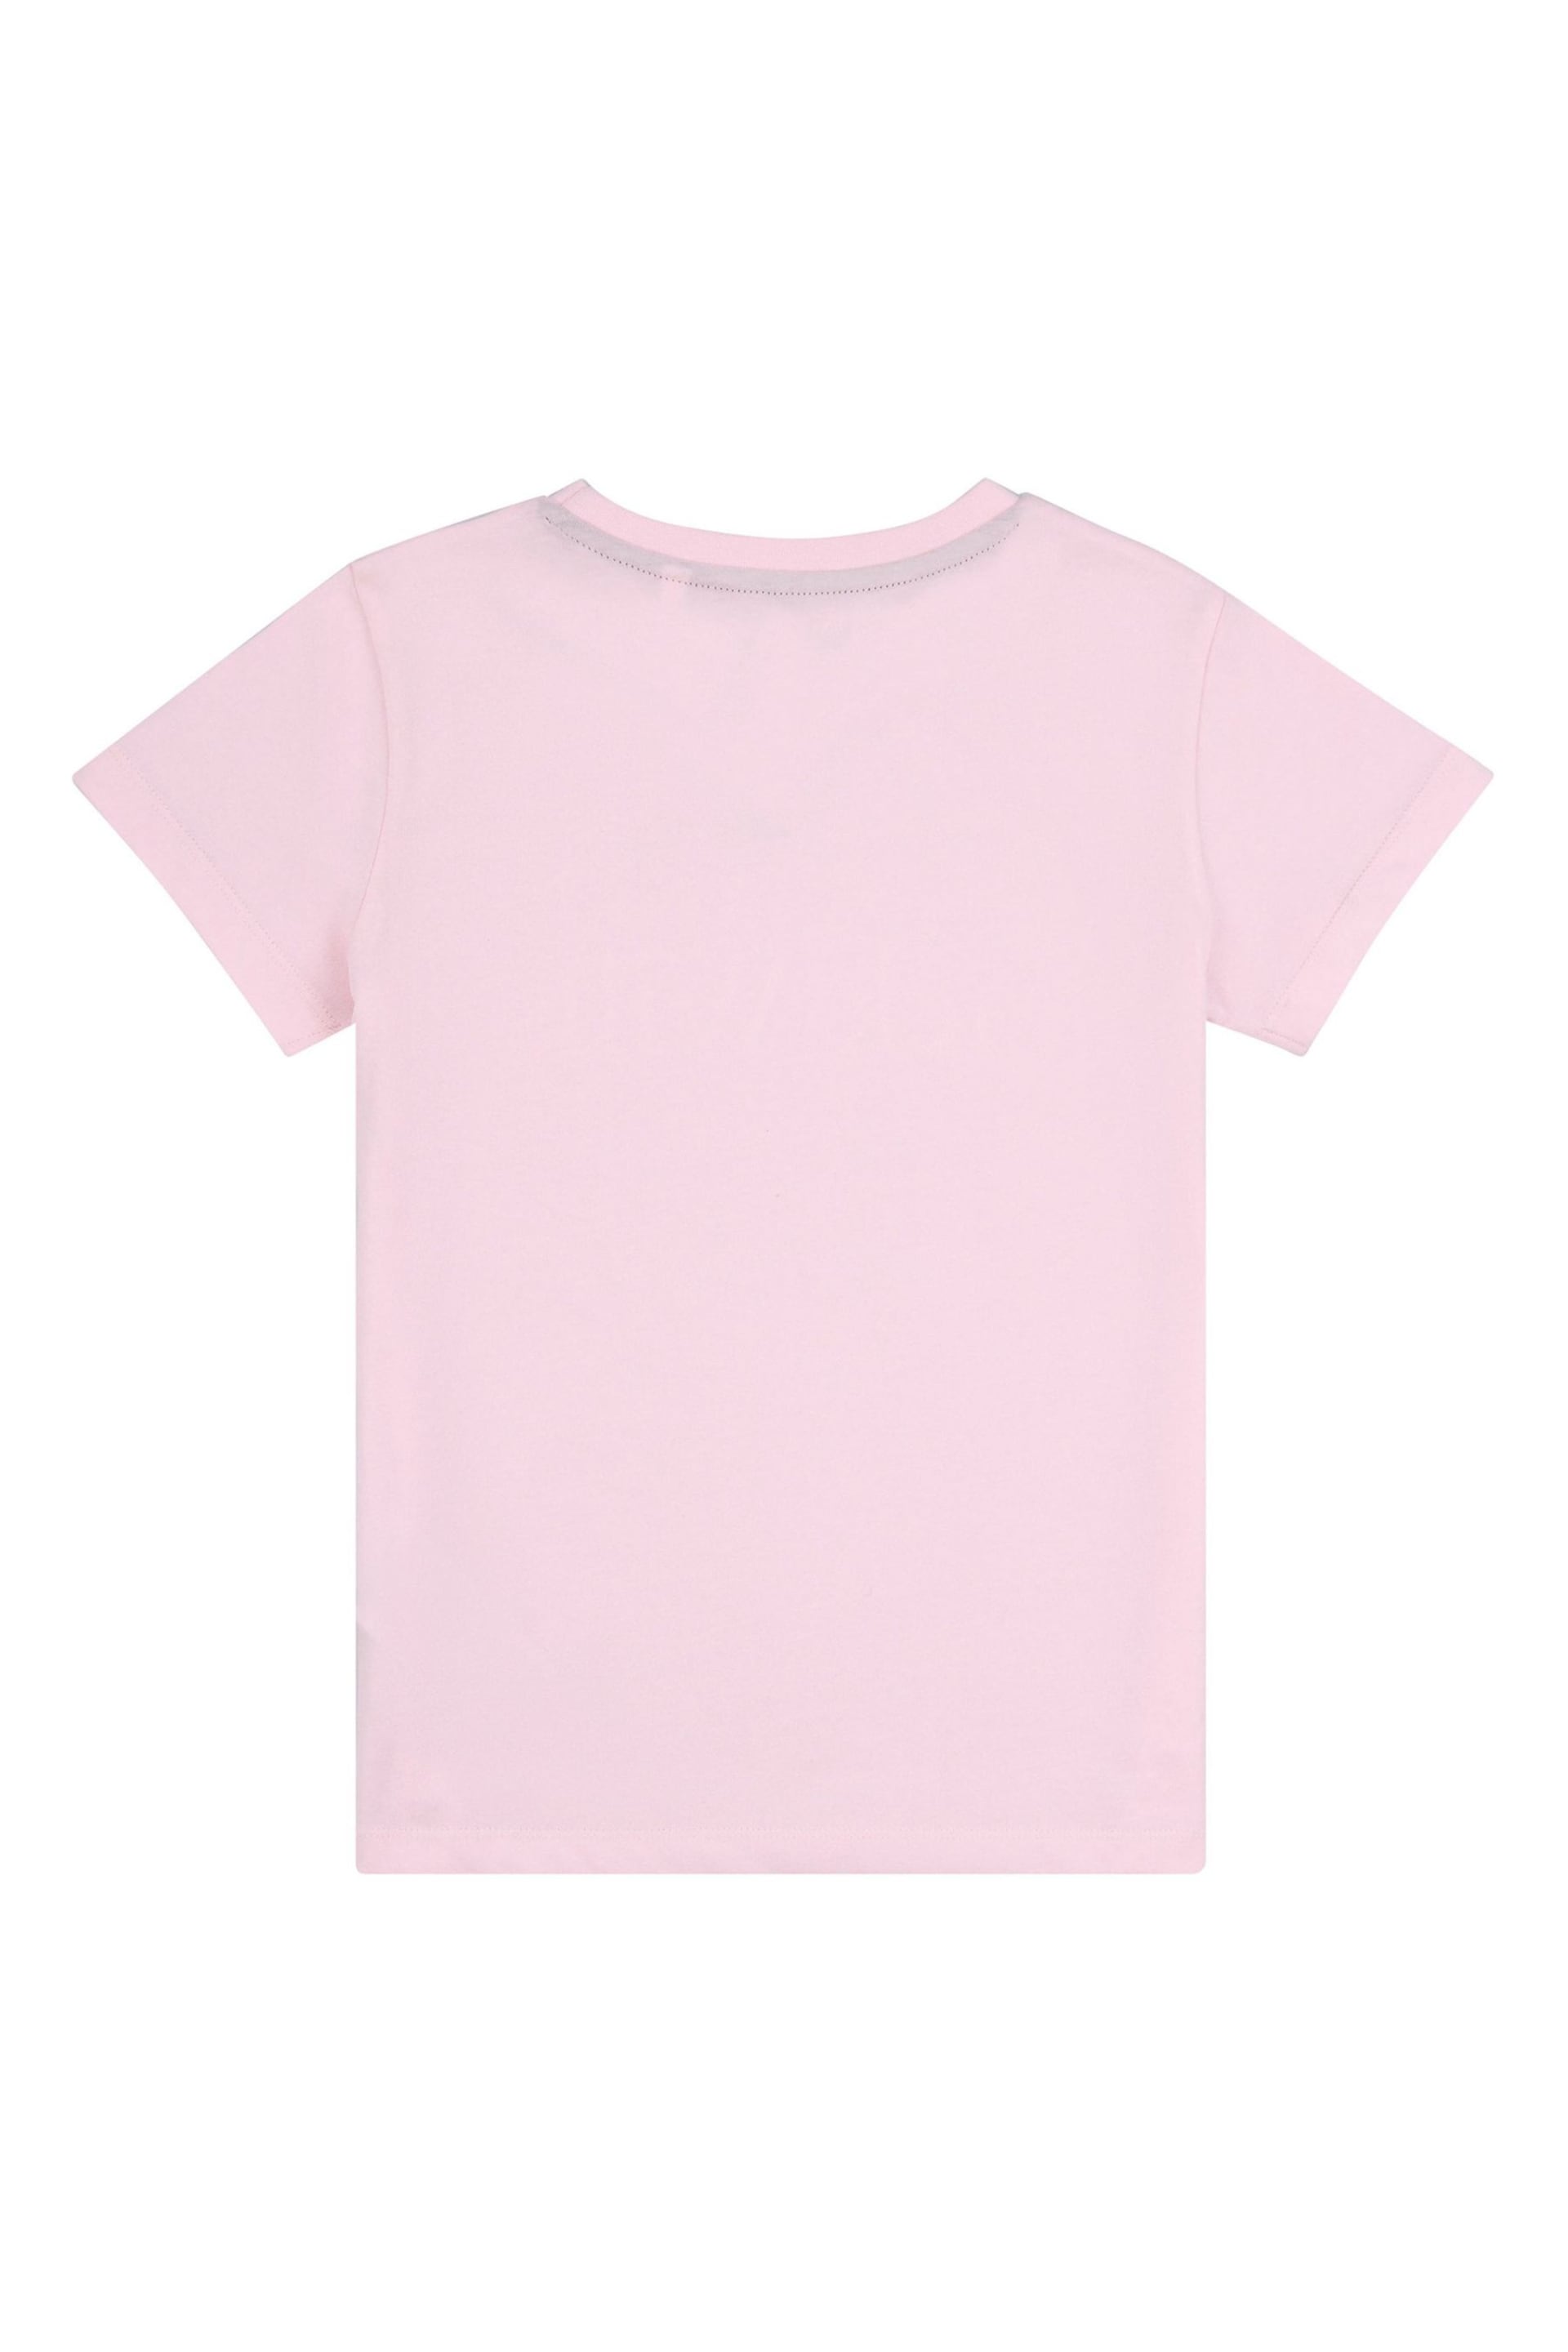 Jack Wills Pink Script T-Shirt - Image 5 of 6